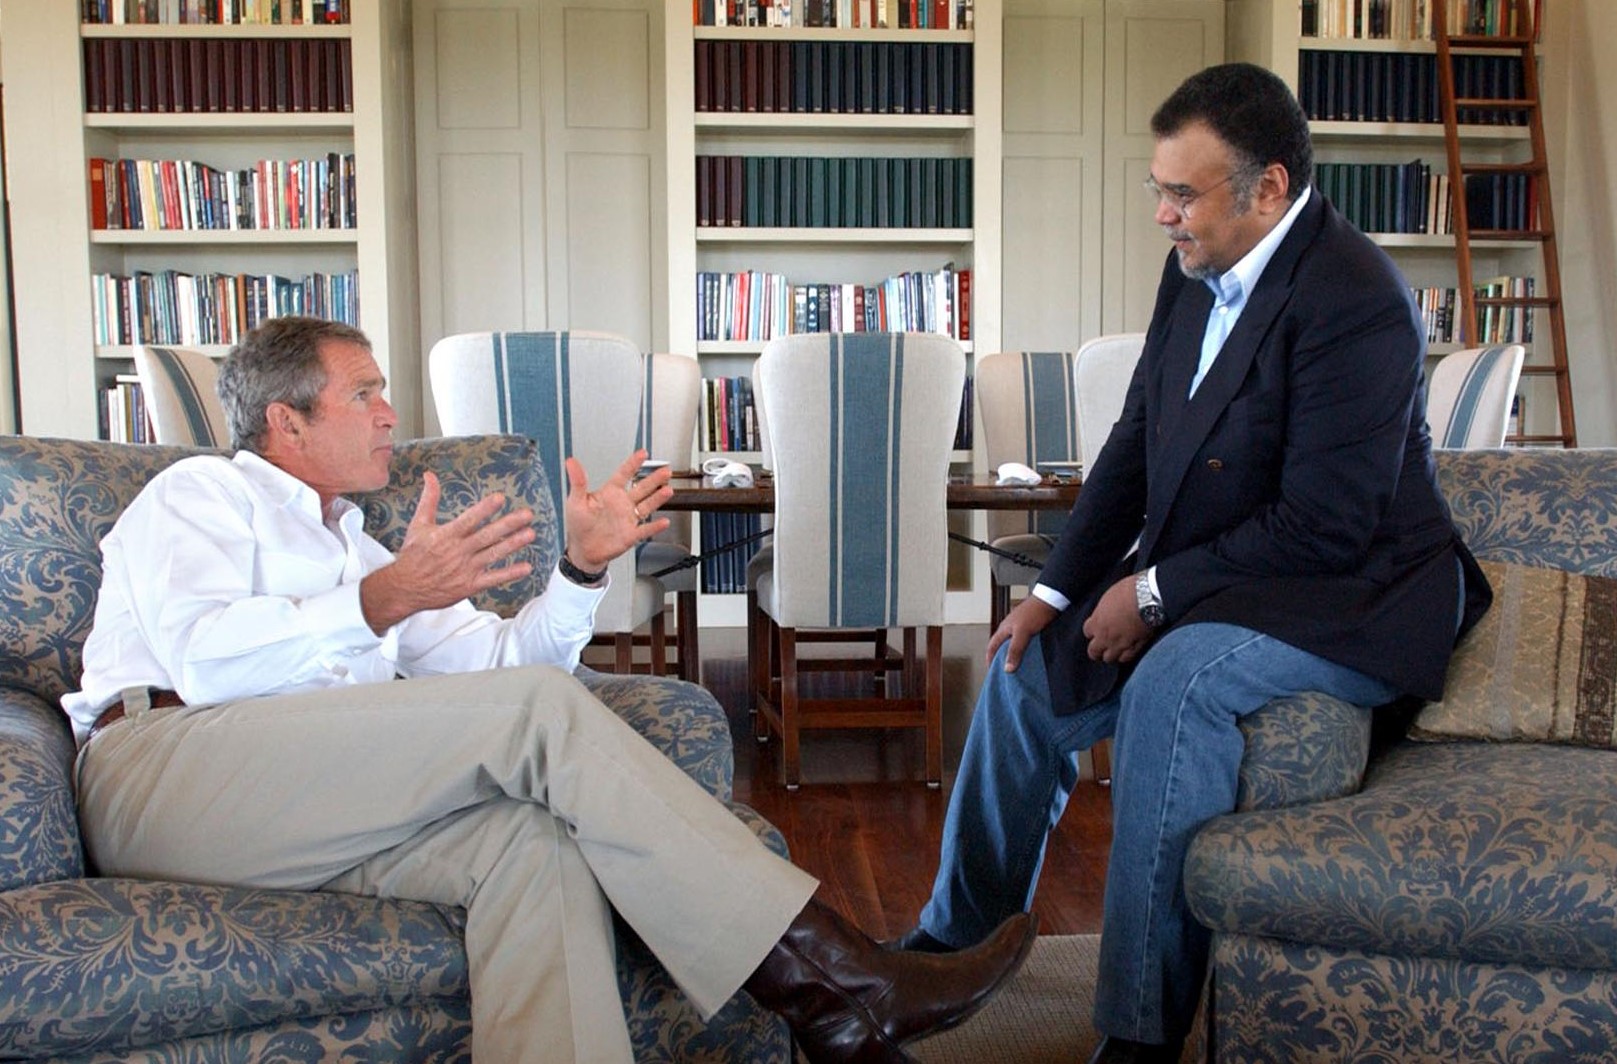  US President George W. Bush (L) meets with Saudi Arabian Ambassador to the US Prince Bandar bin Sultan at the Bush Ranch 27 August 2002 in Crawford, Texas.